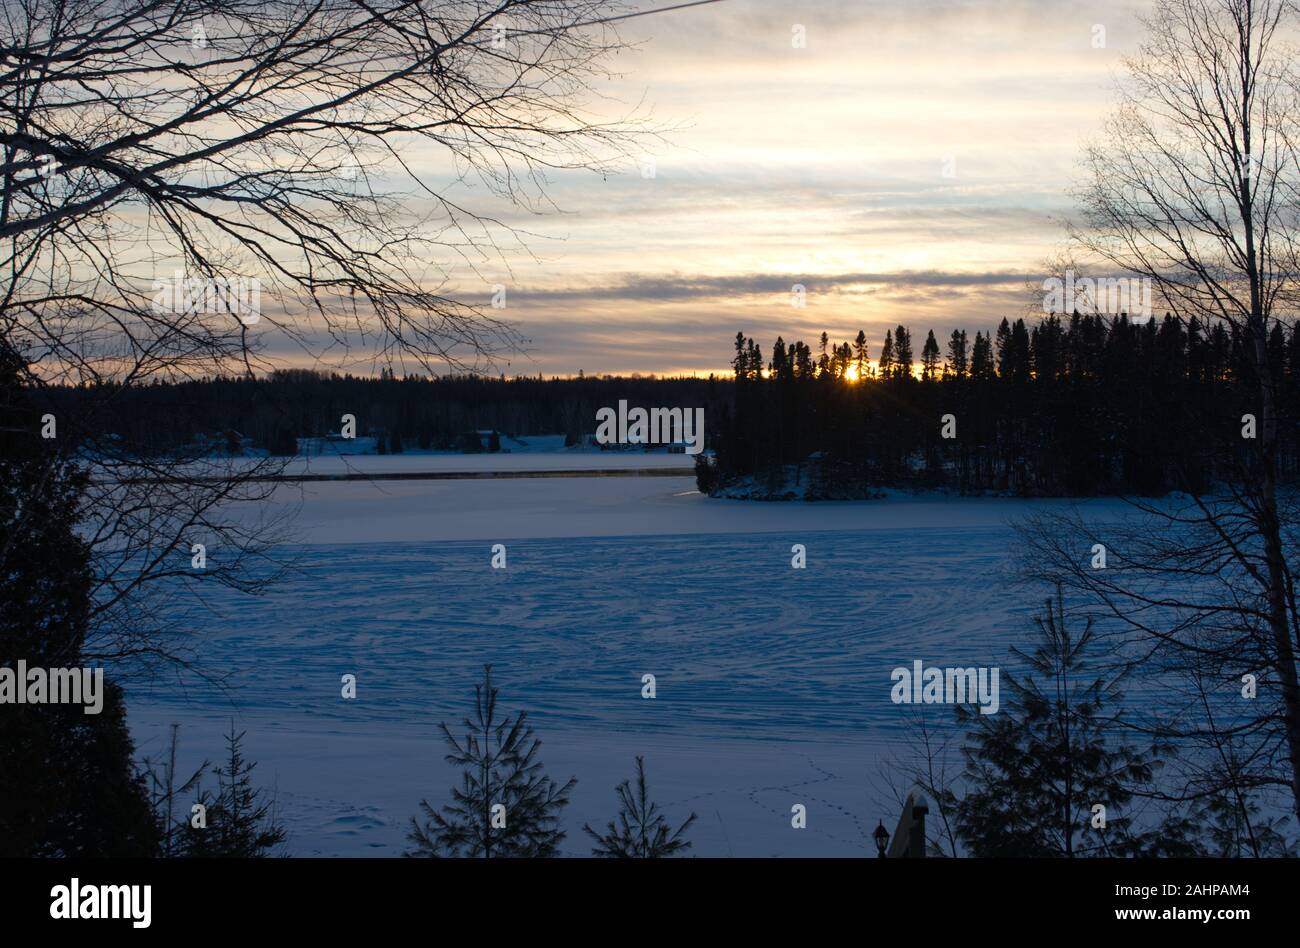 Lac Brochet winter picture, Lake view at winter on evening, Lac Brochet, Saint-David-de-Falareau, Quebec, Canada Stock Photo